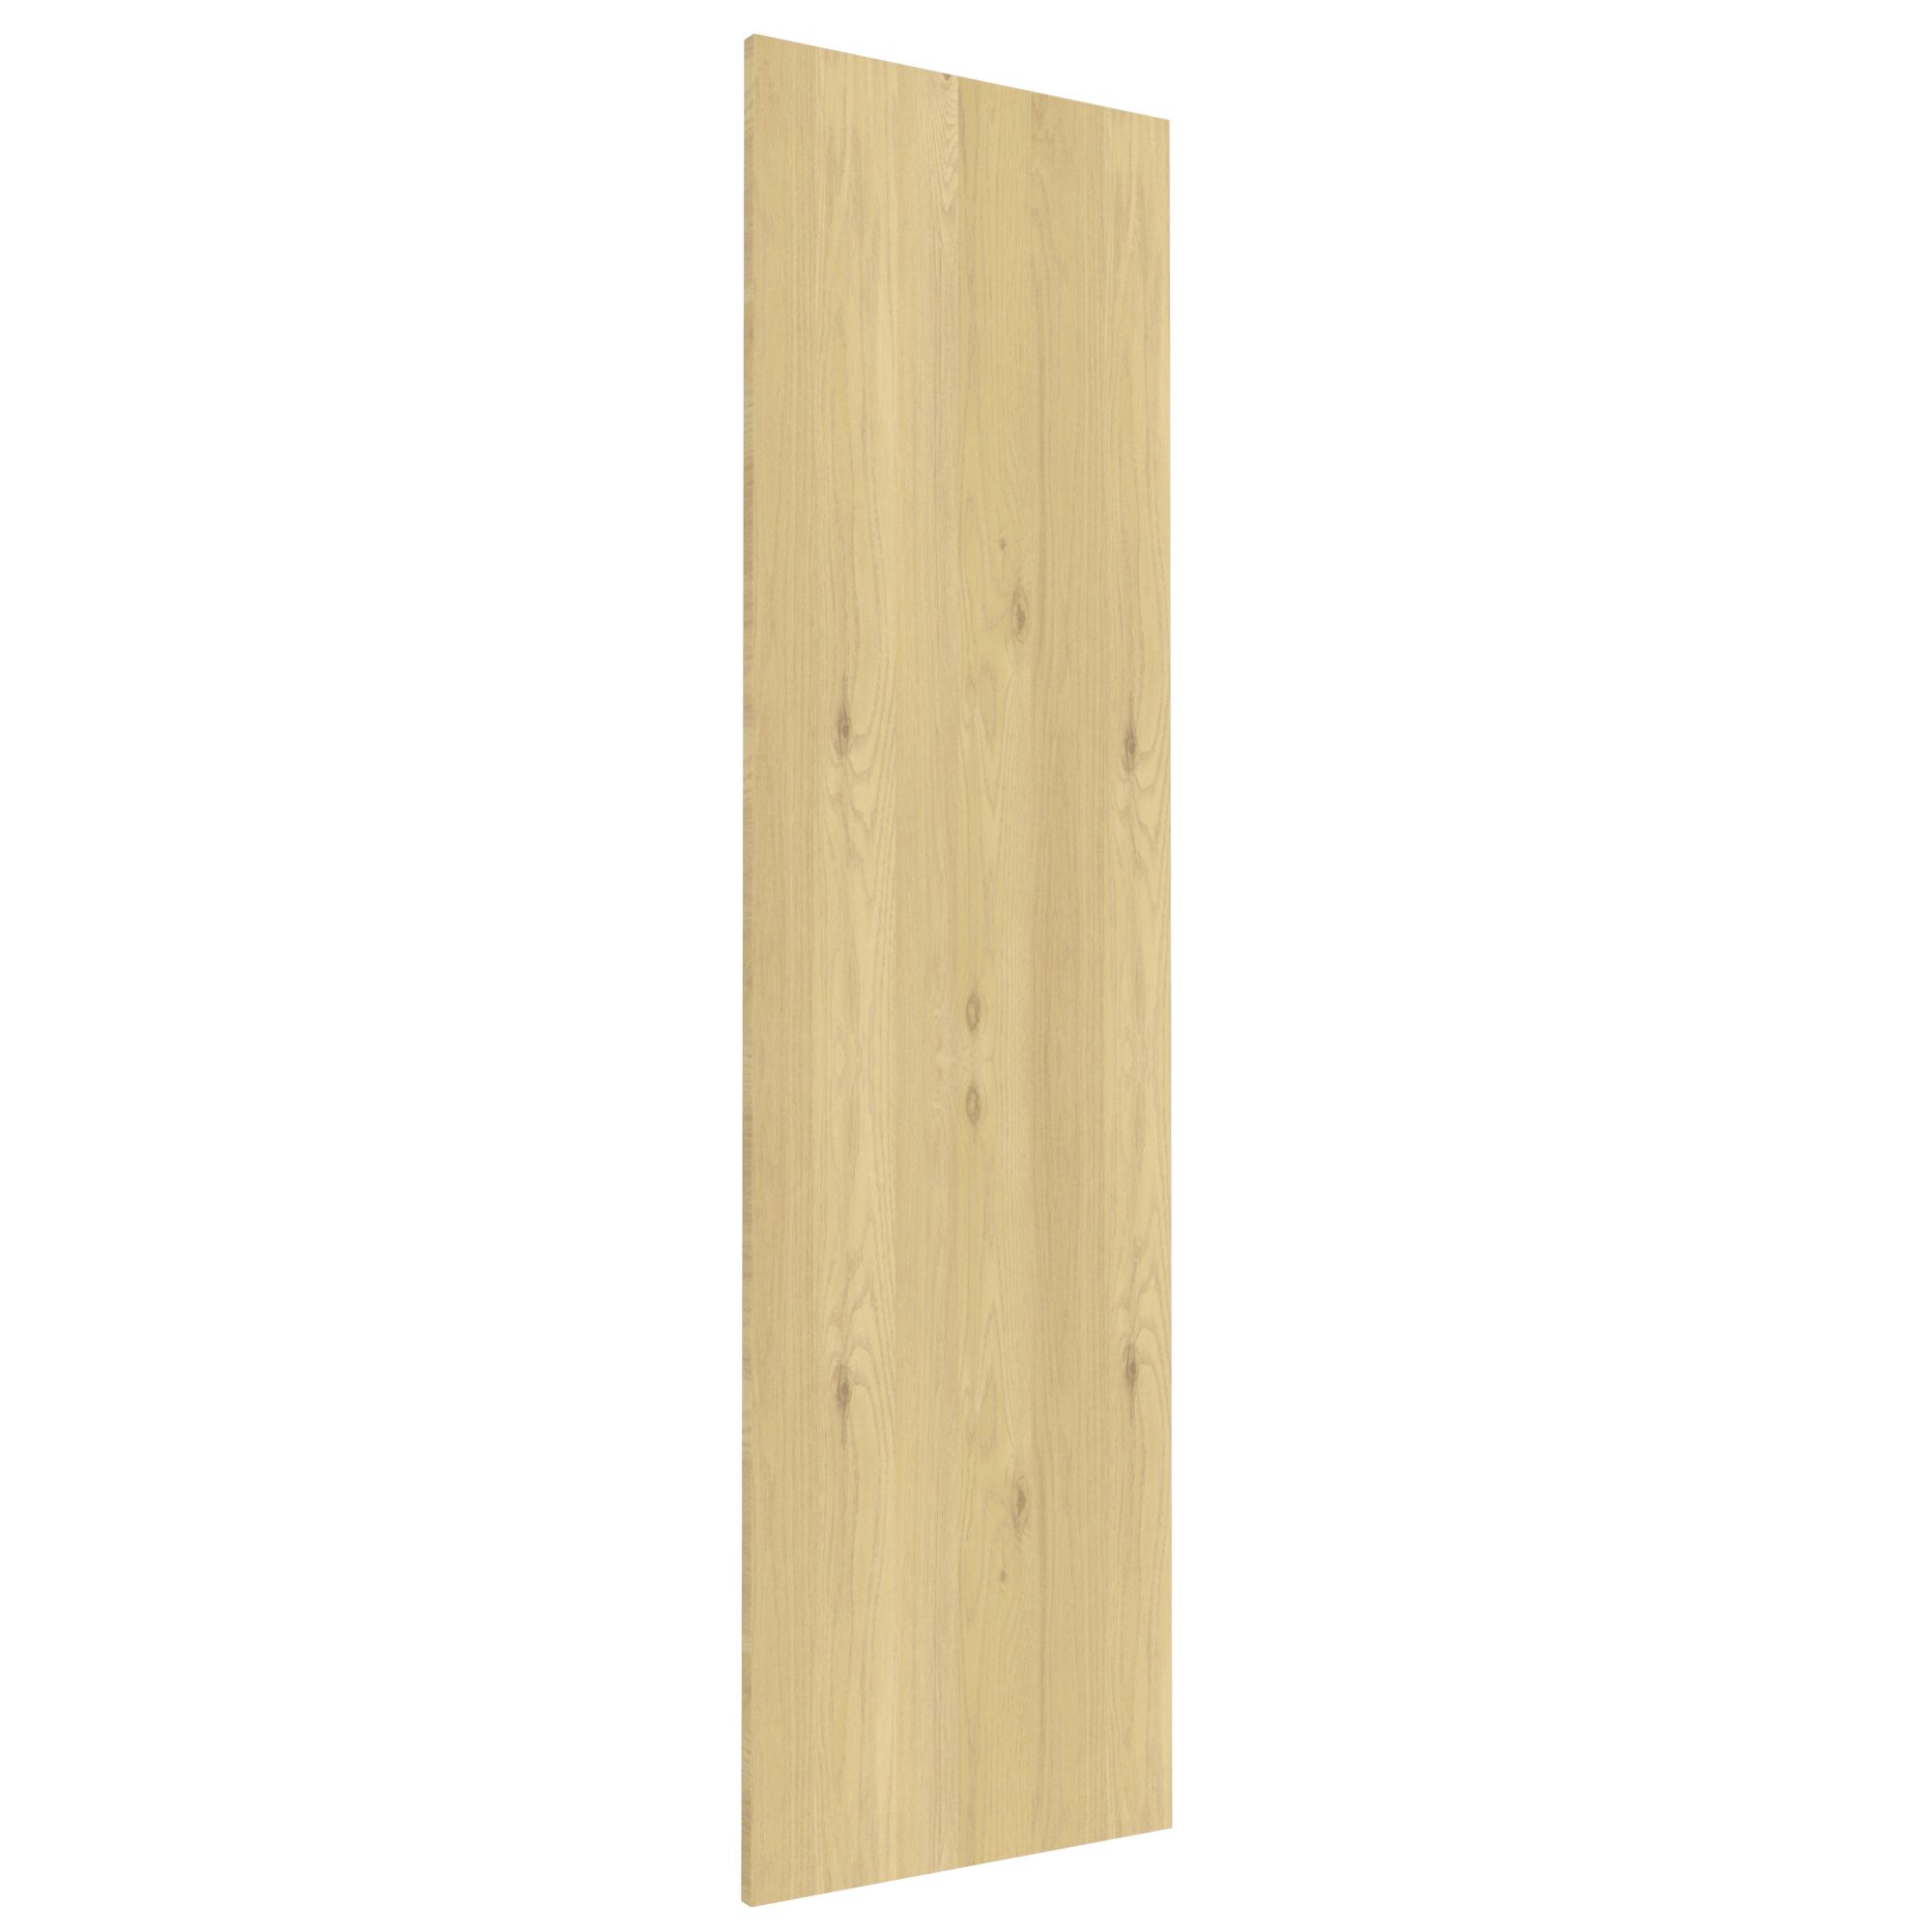 Form Darwin Modular Oak effect Wardrobe door (H)1440mm (W)372mm